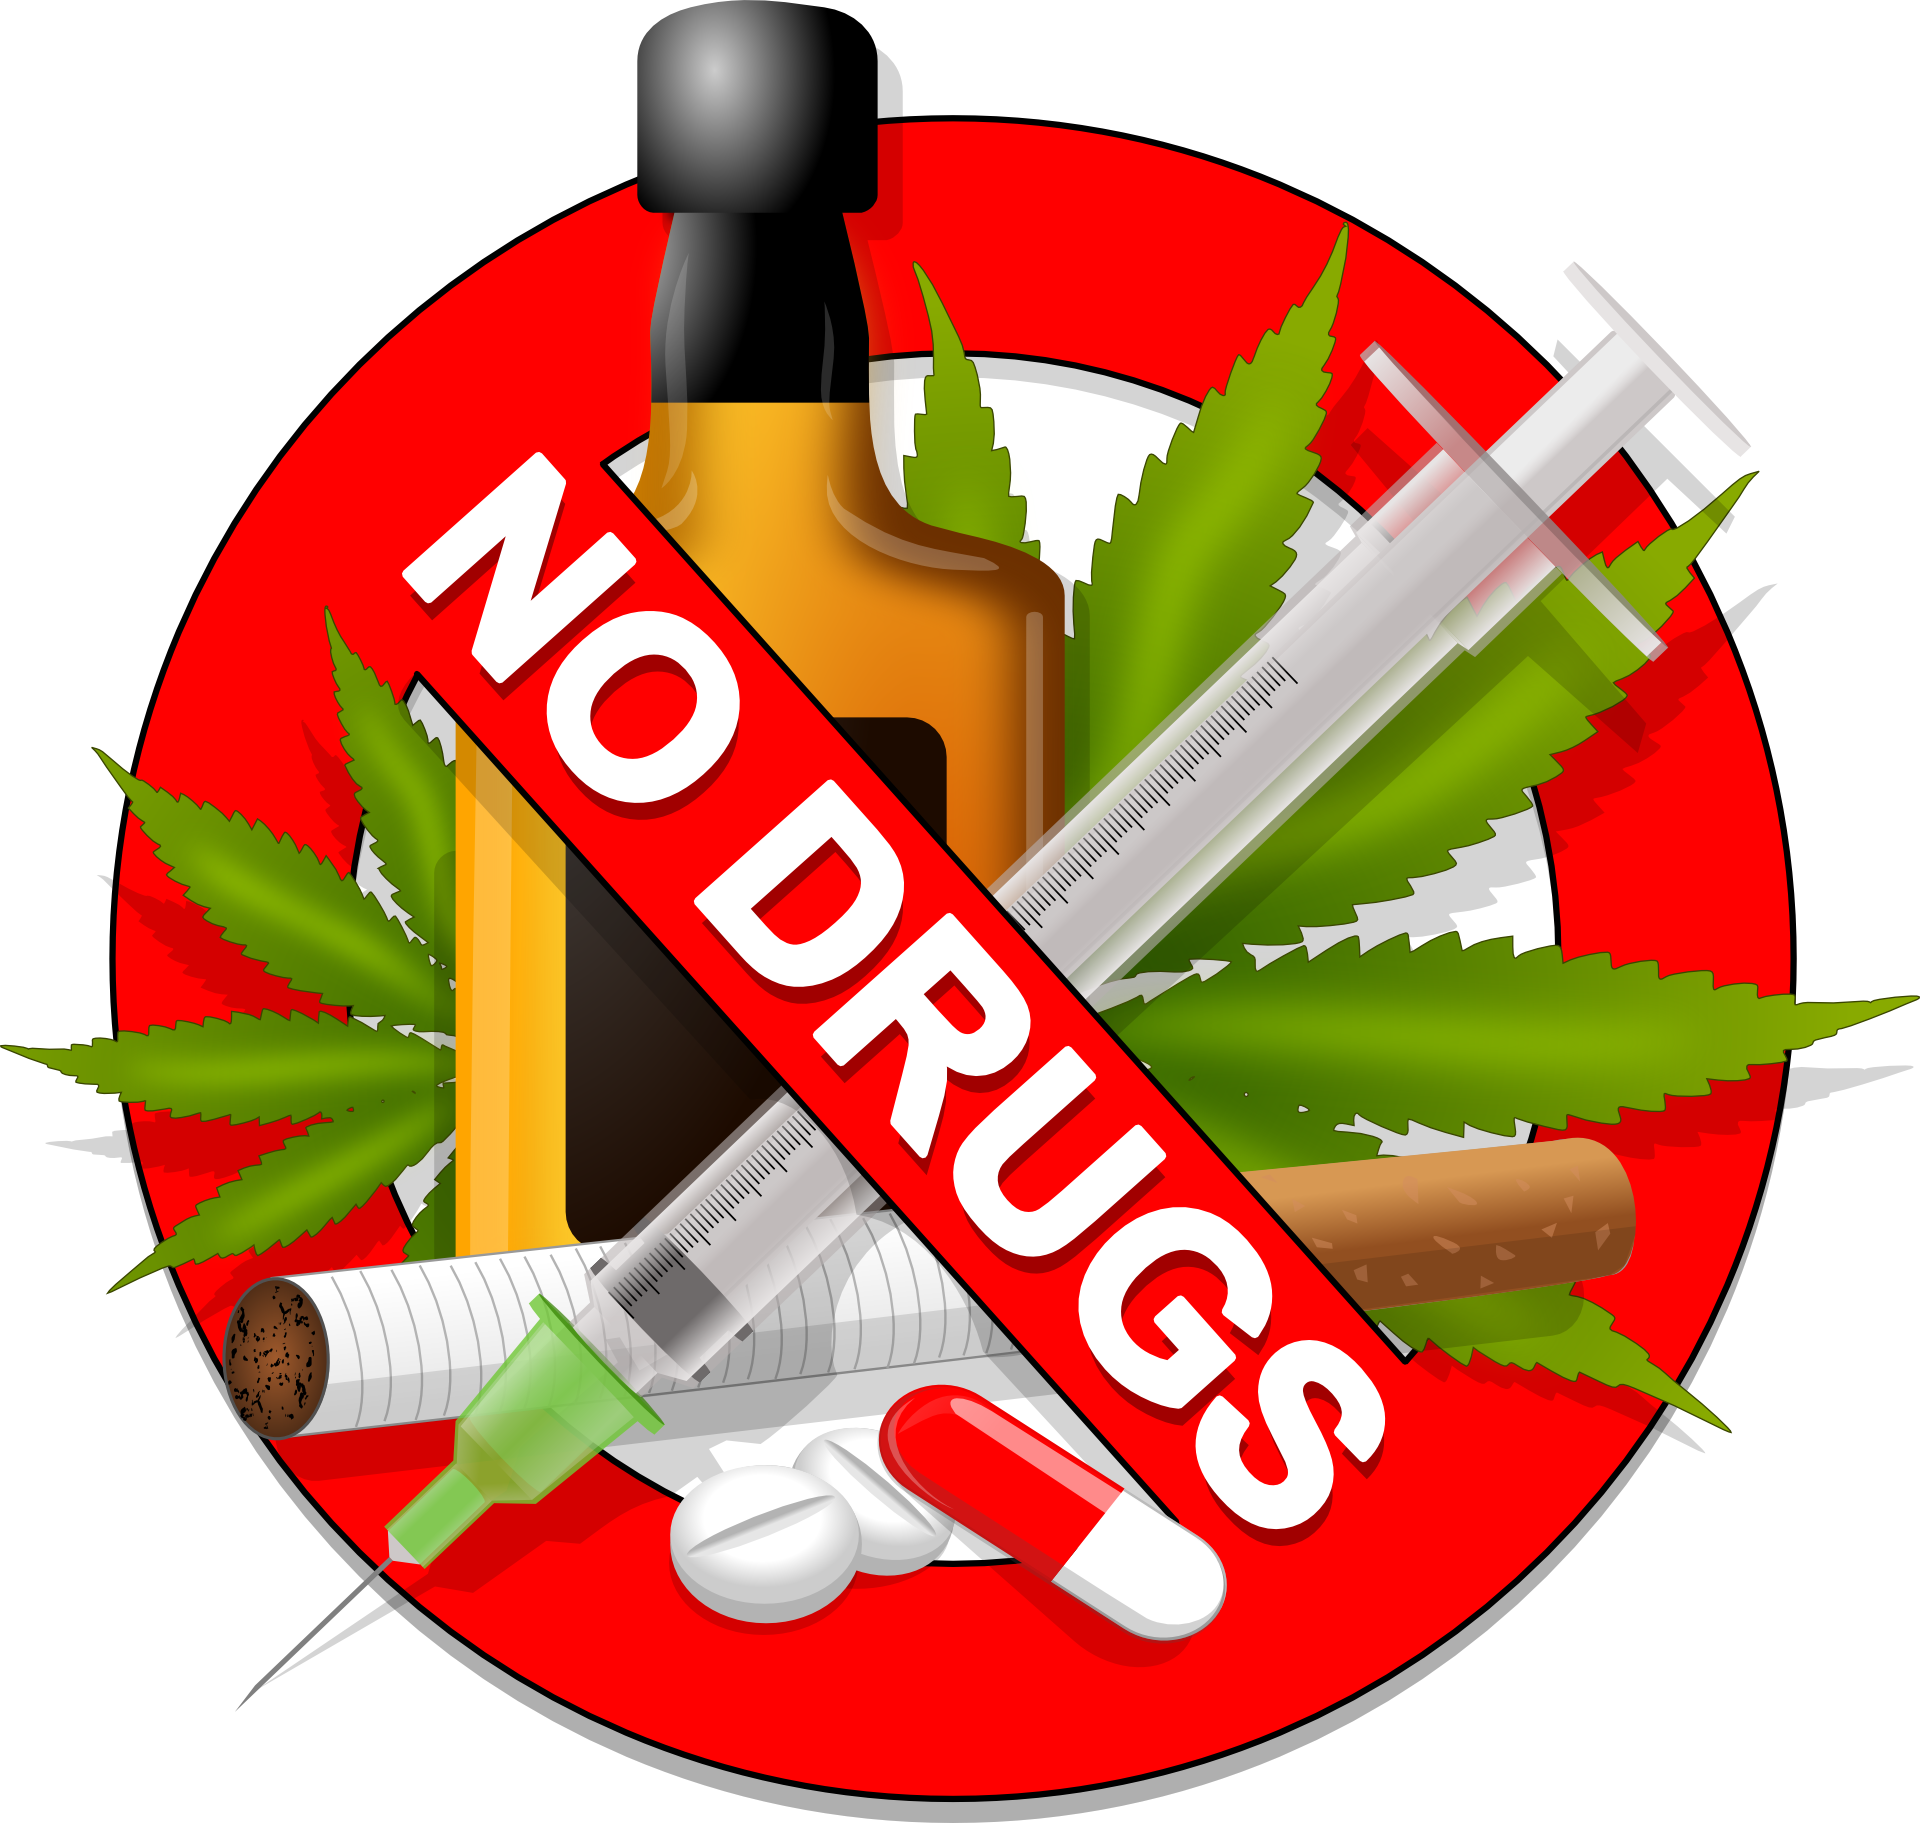 Drug clipart drug addiction. No drugs willow springs